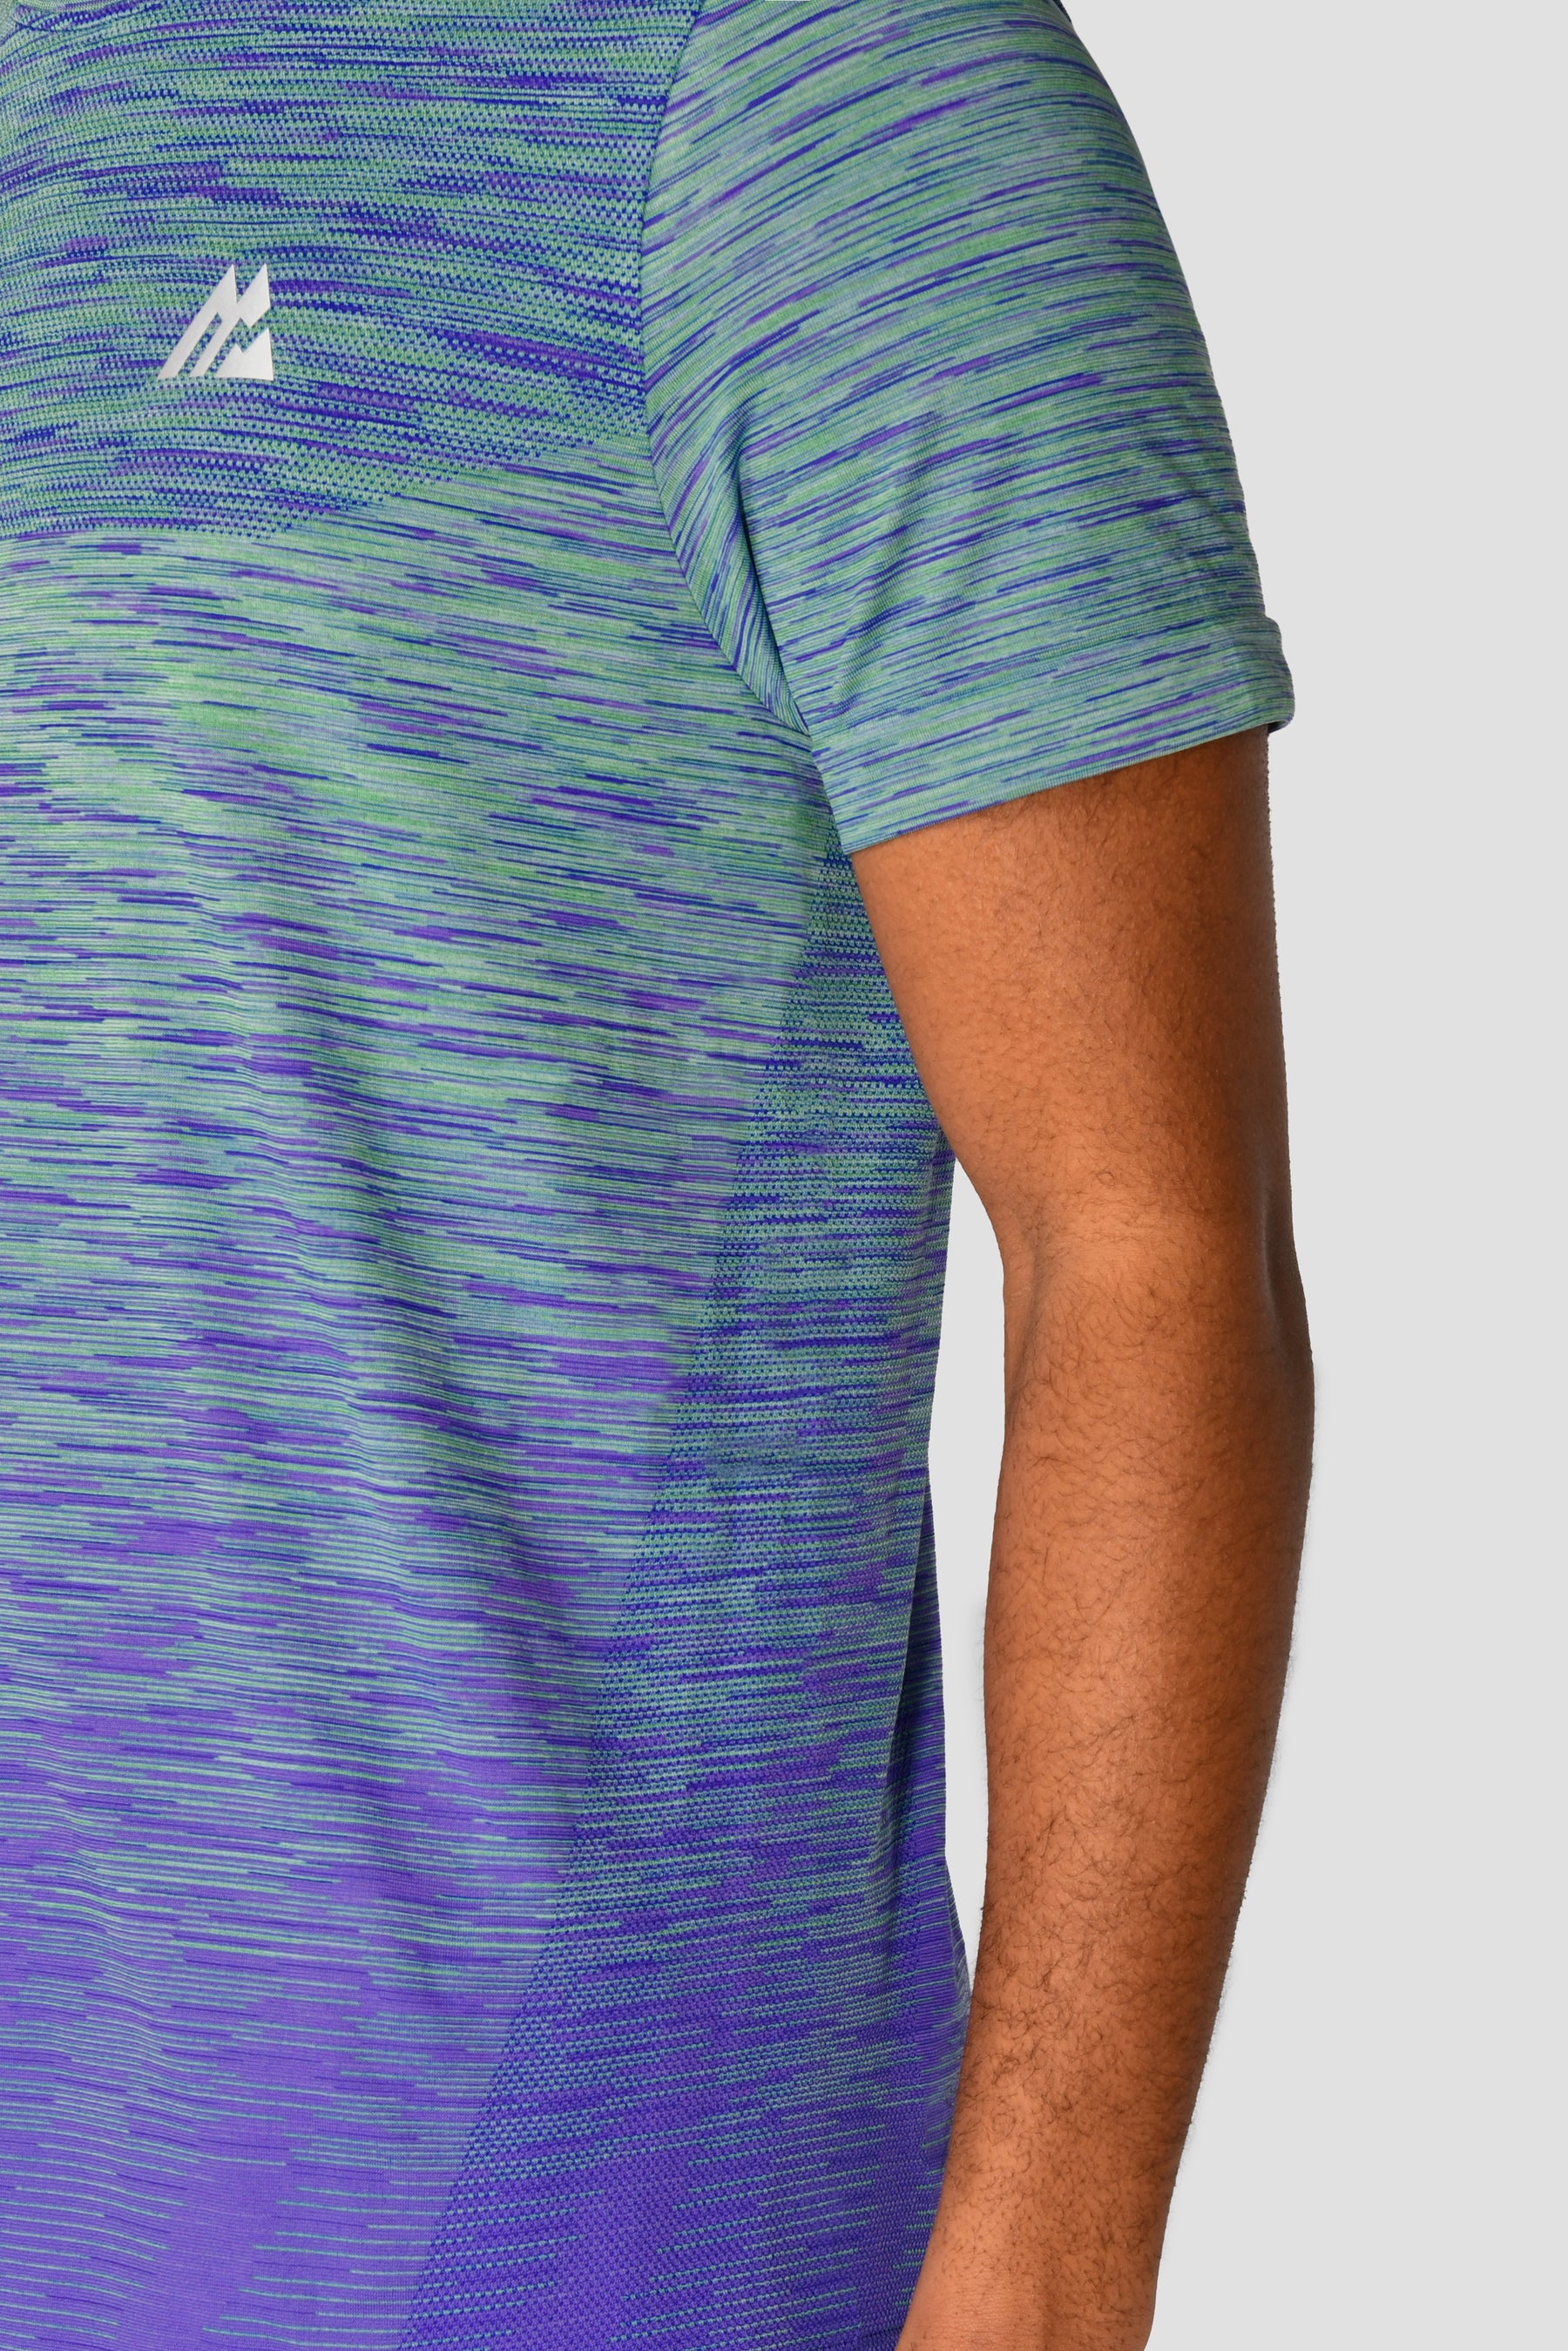 Men's Trail Seamless T-Shirt - Green/Purple